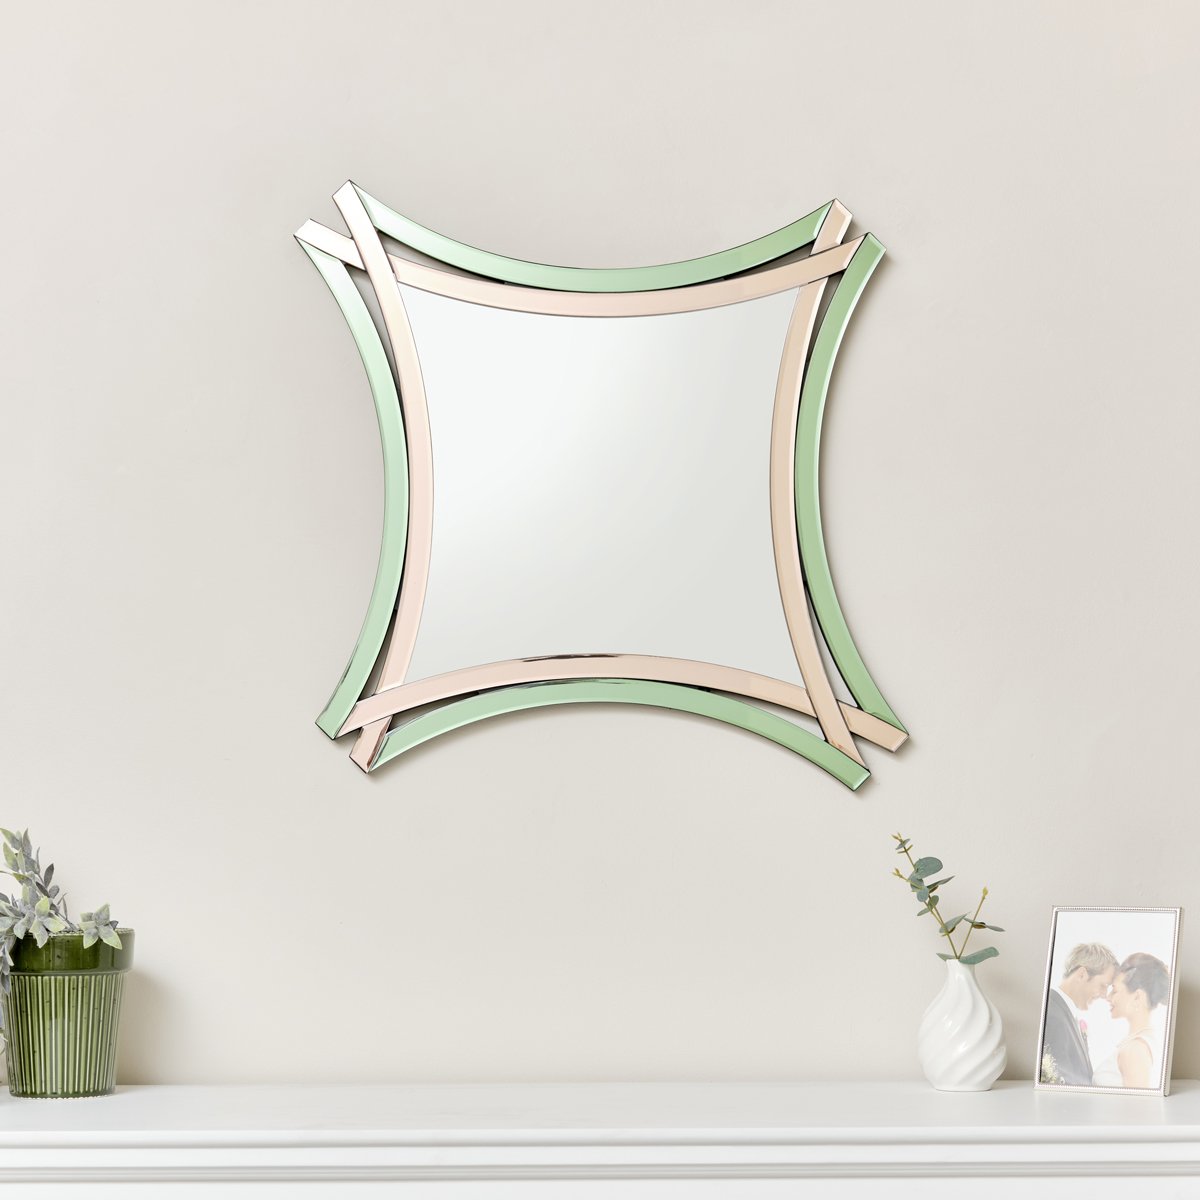 Art Deco Green & Pink Glass Cross Over Wall Mirror 80cm x 75cm